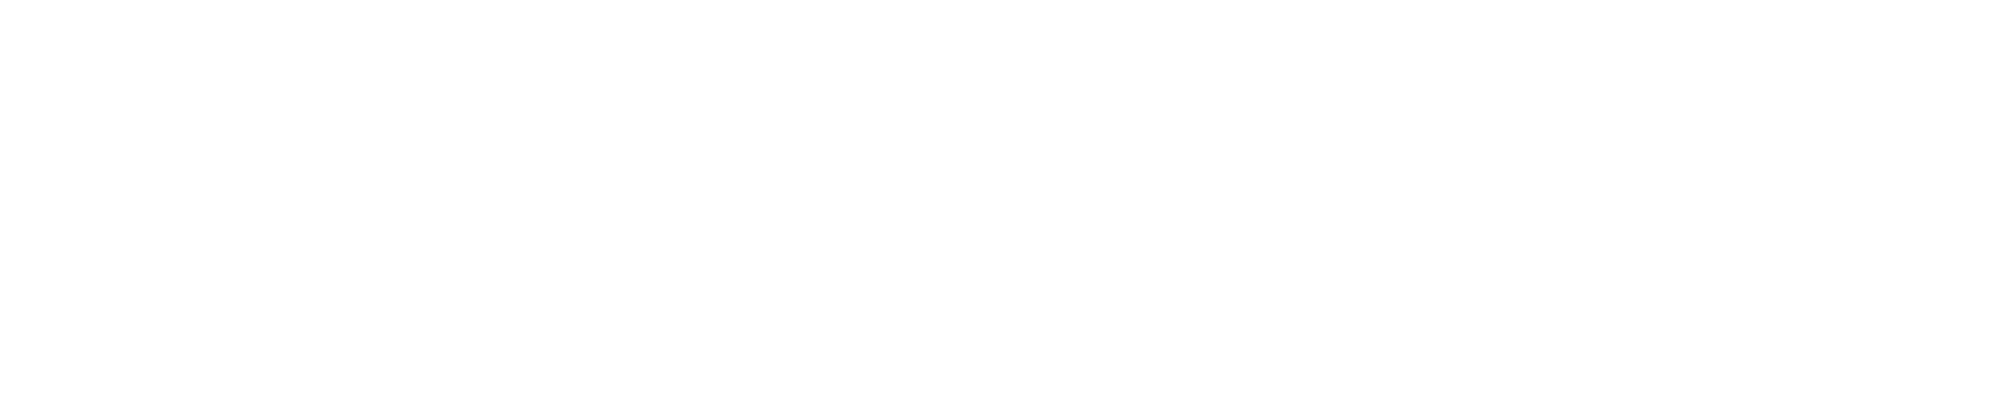 University of Chicago Maroons Logo - UChicago Fencing